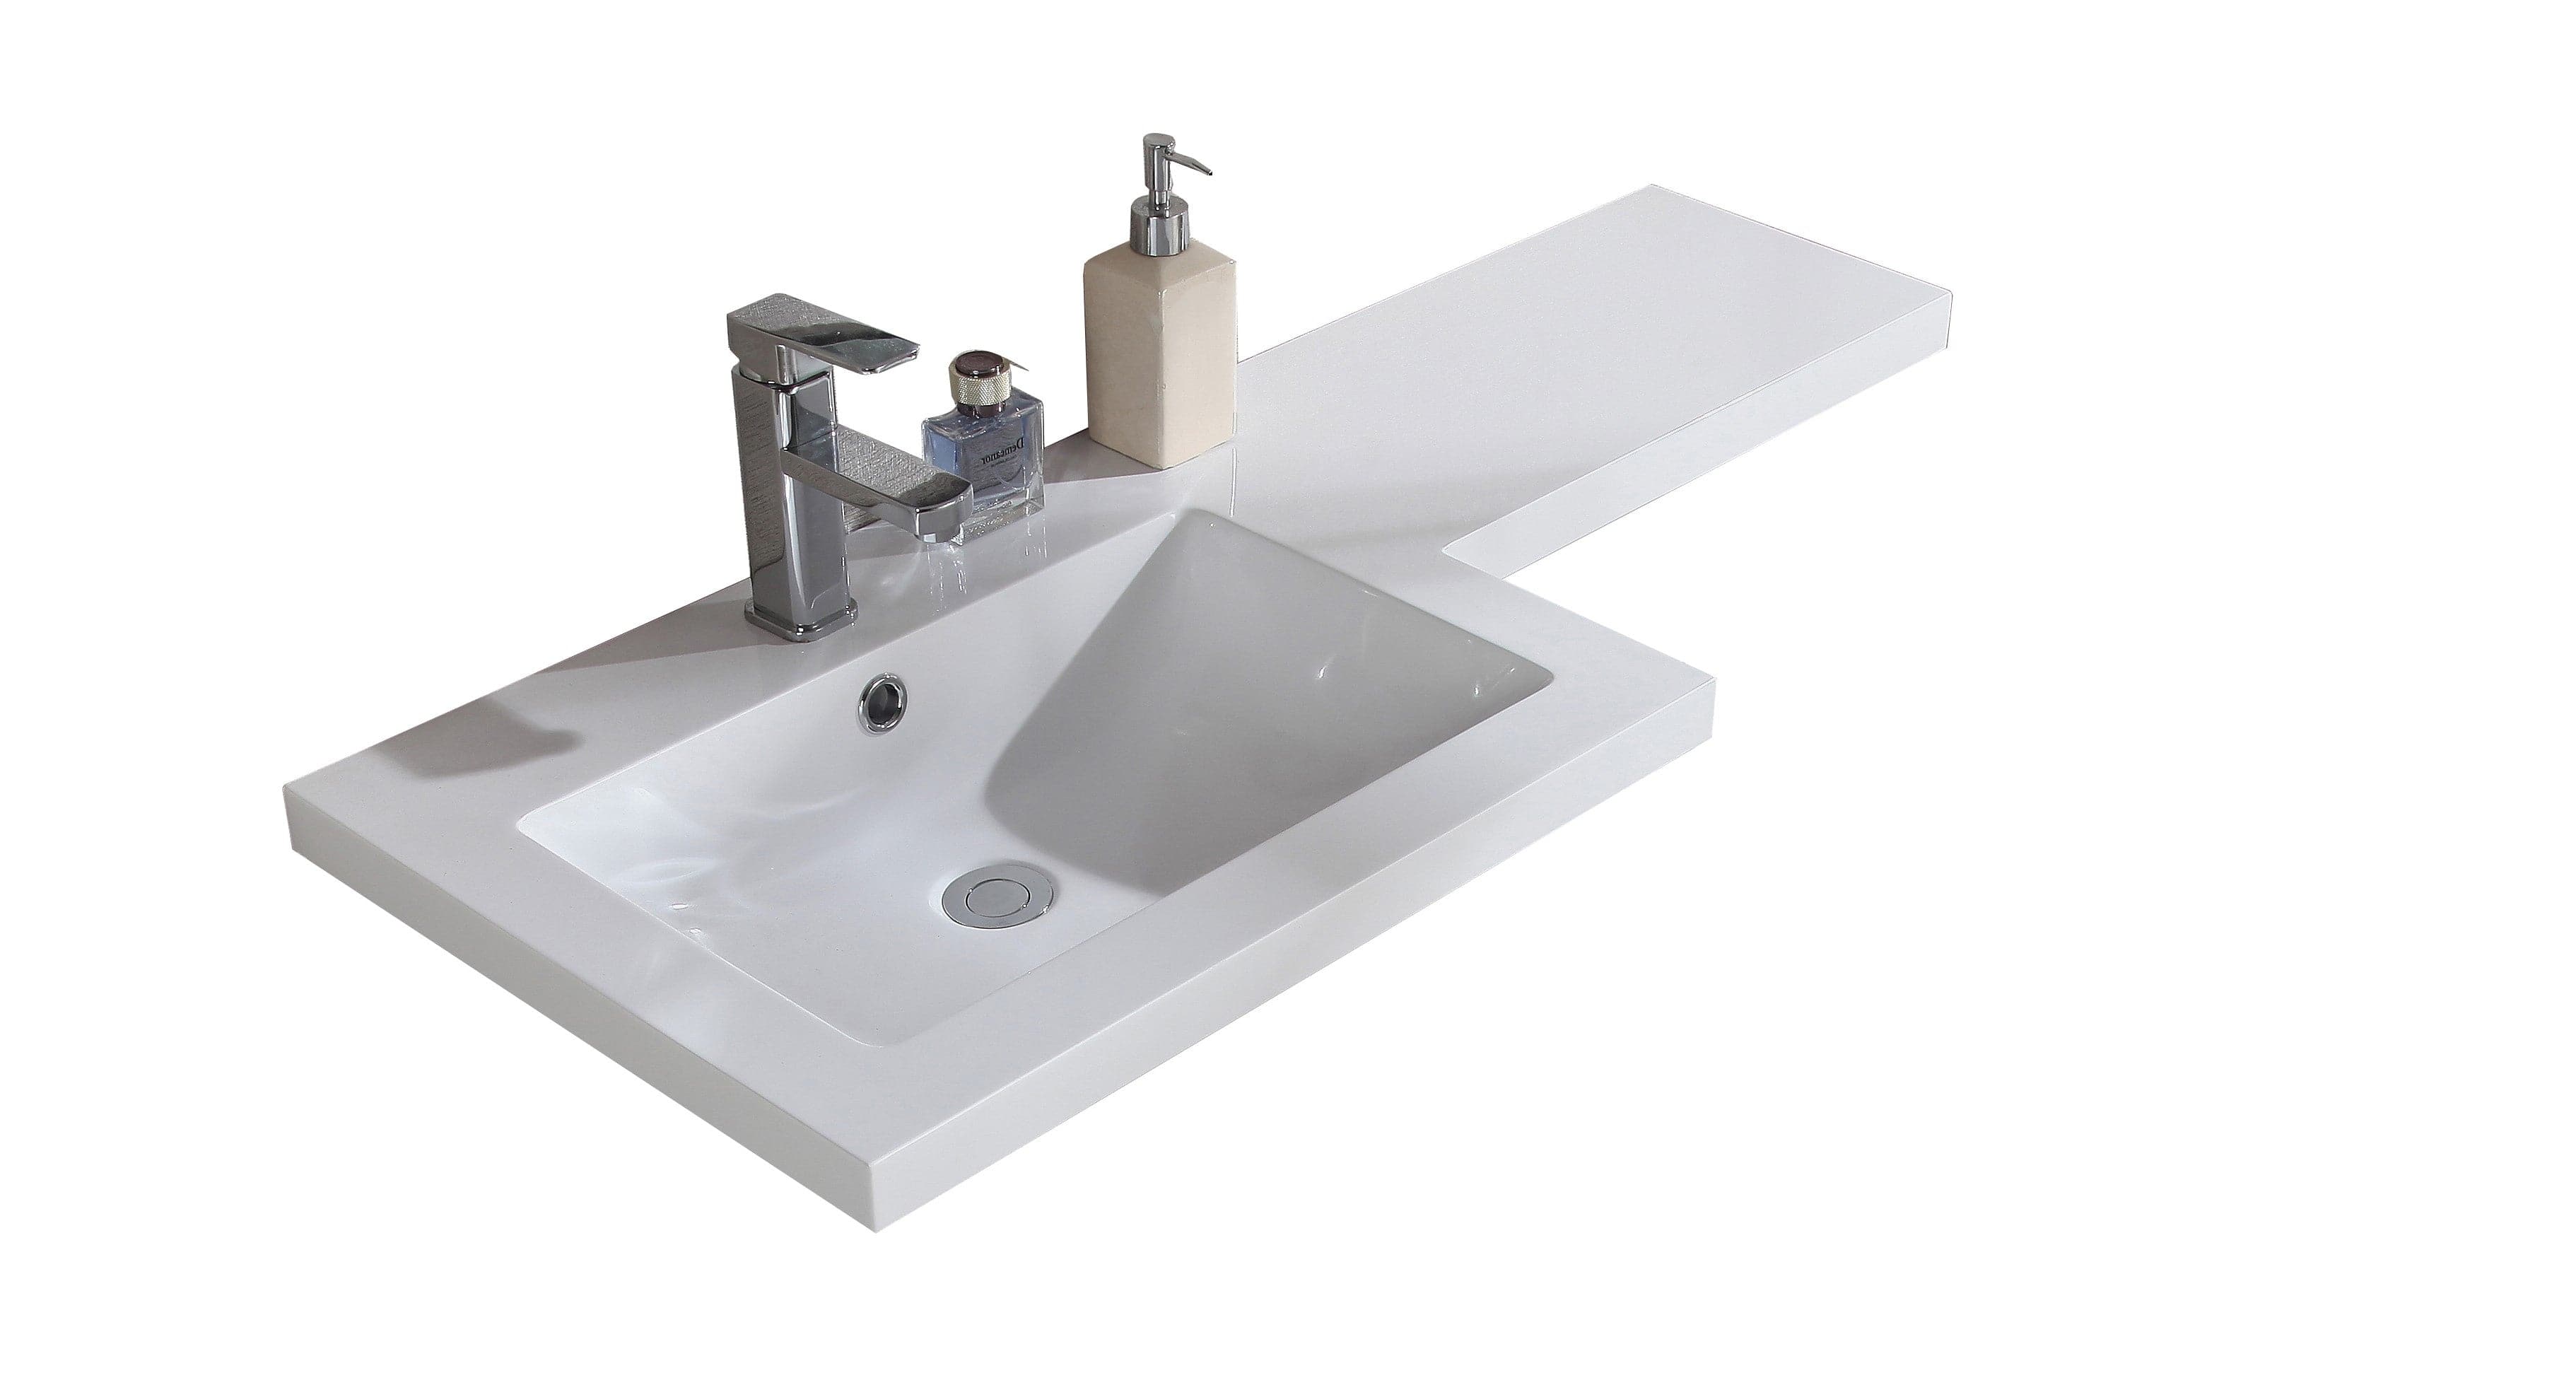 Gamma L Shape Vanity & WC Unit LH Gloss White: Modern bathroom furniture set, space-saving design, ideal for UK homes. Buy online!